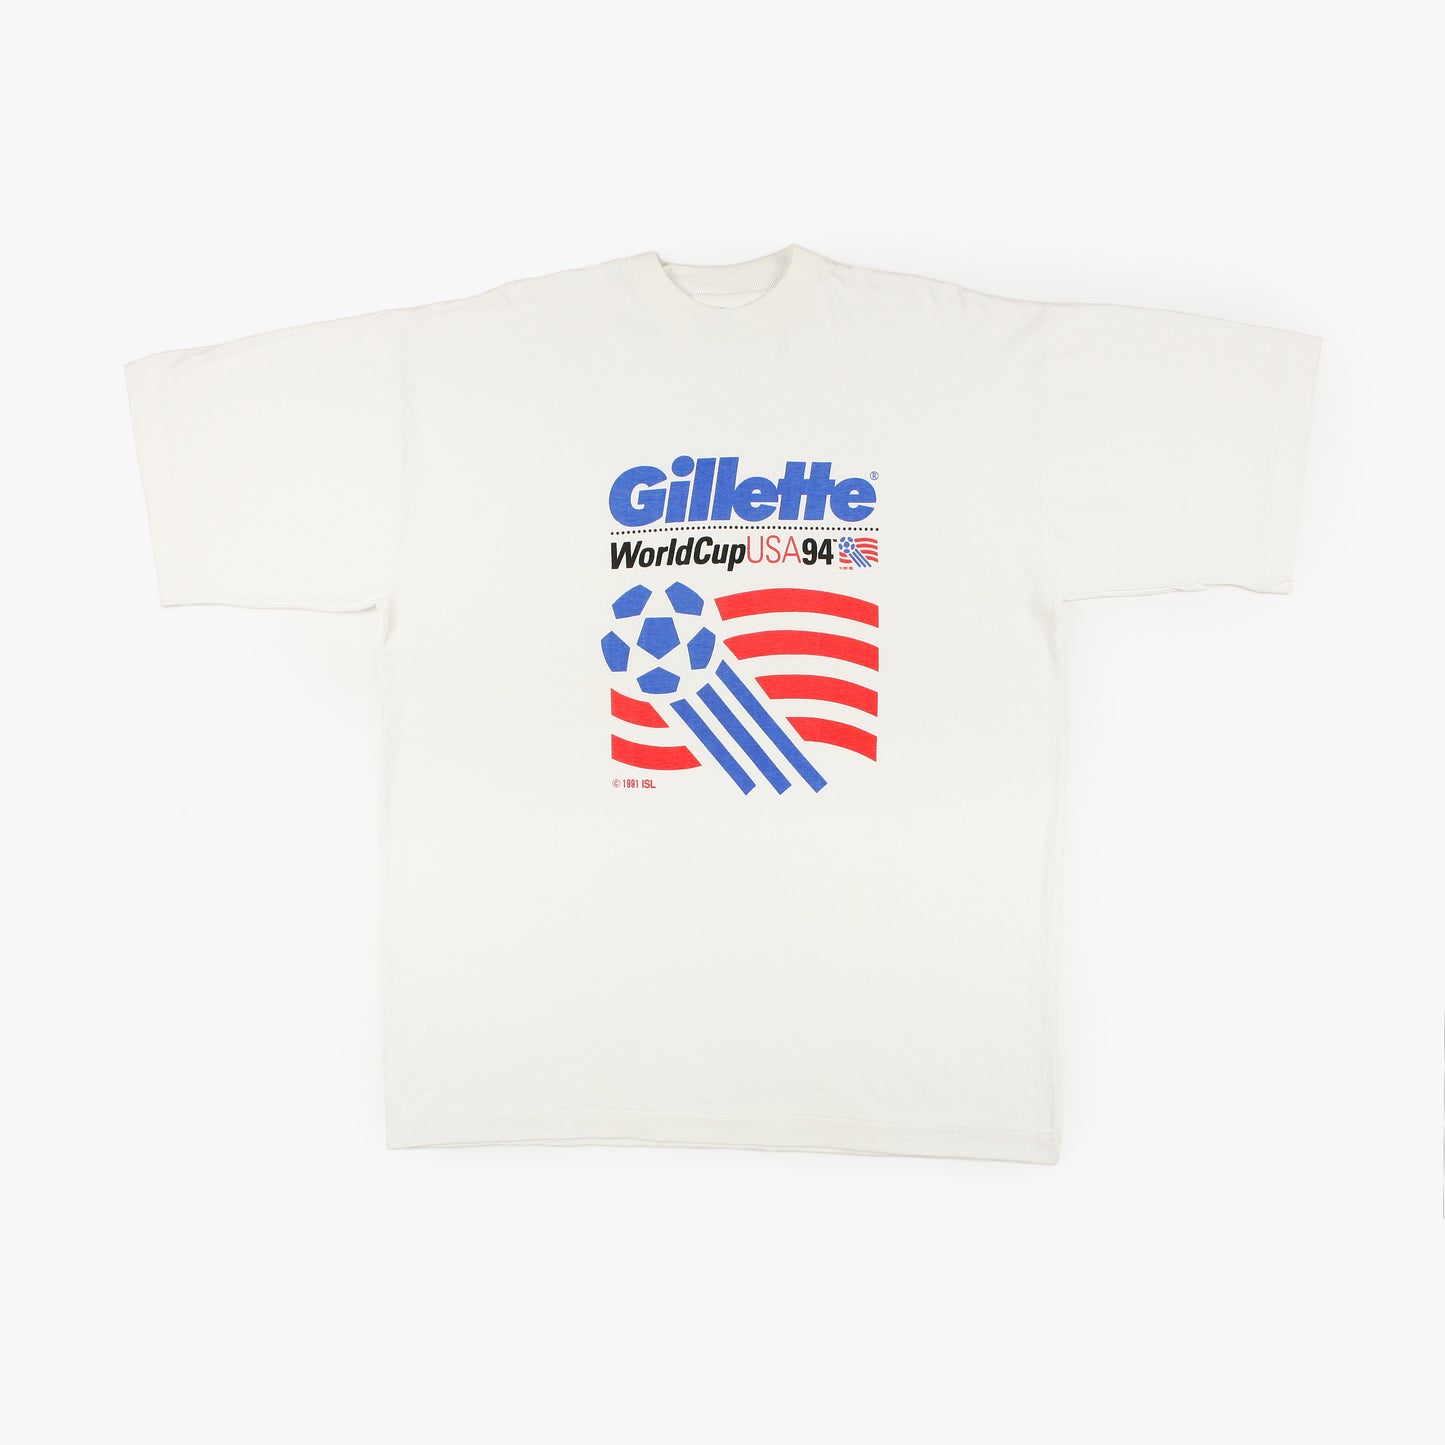 Gillette World Cup USA '94 • Promotional T-Shirt • XL